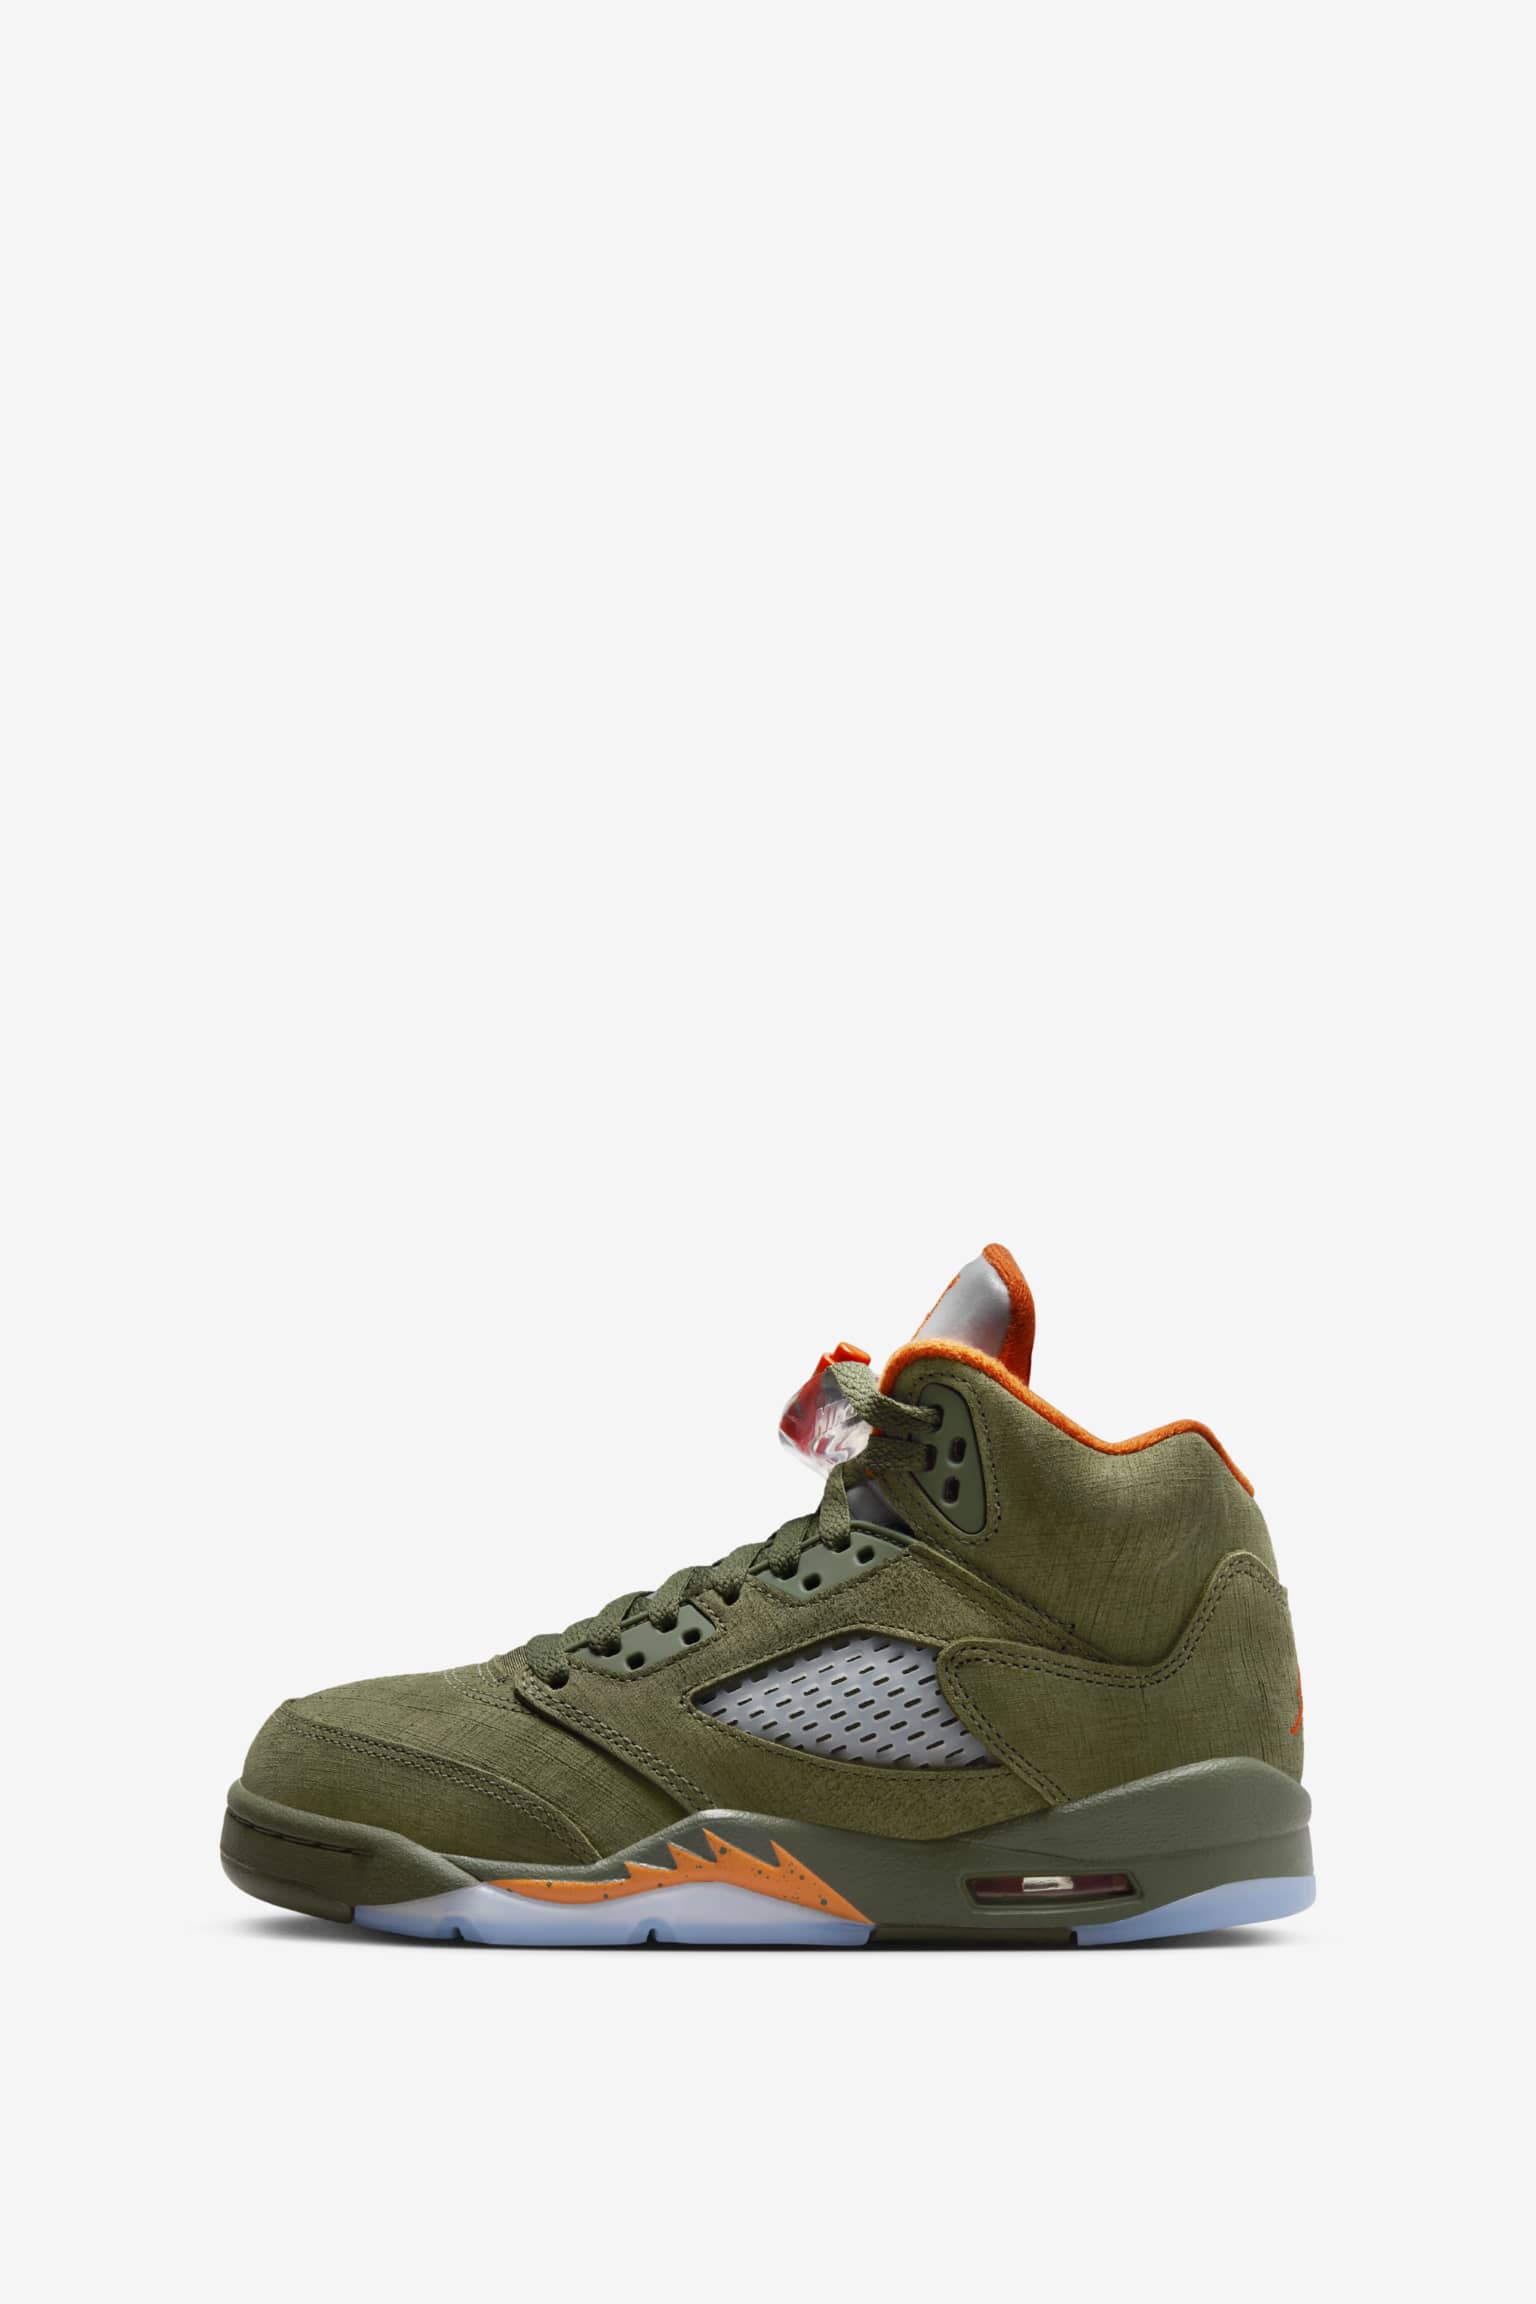 Air Jordan 5 'Olive' (DD0587-308) Release Date. Nike SNKRS